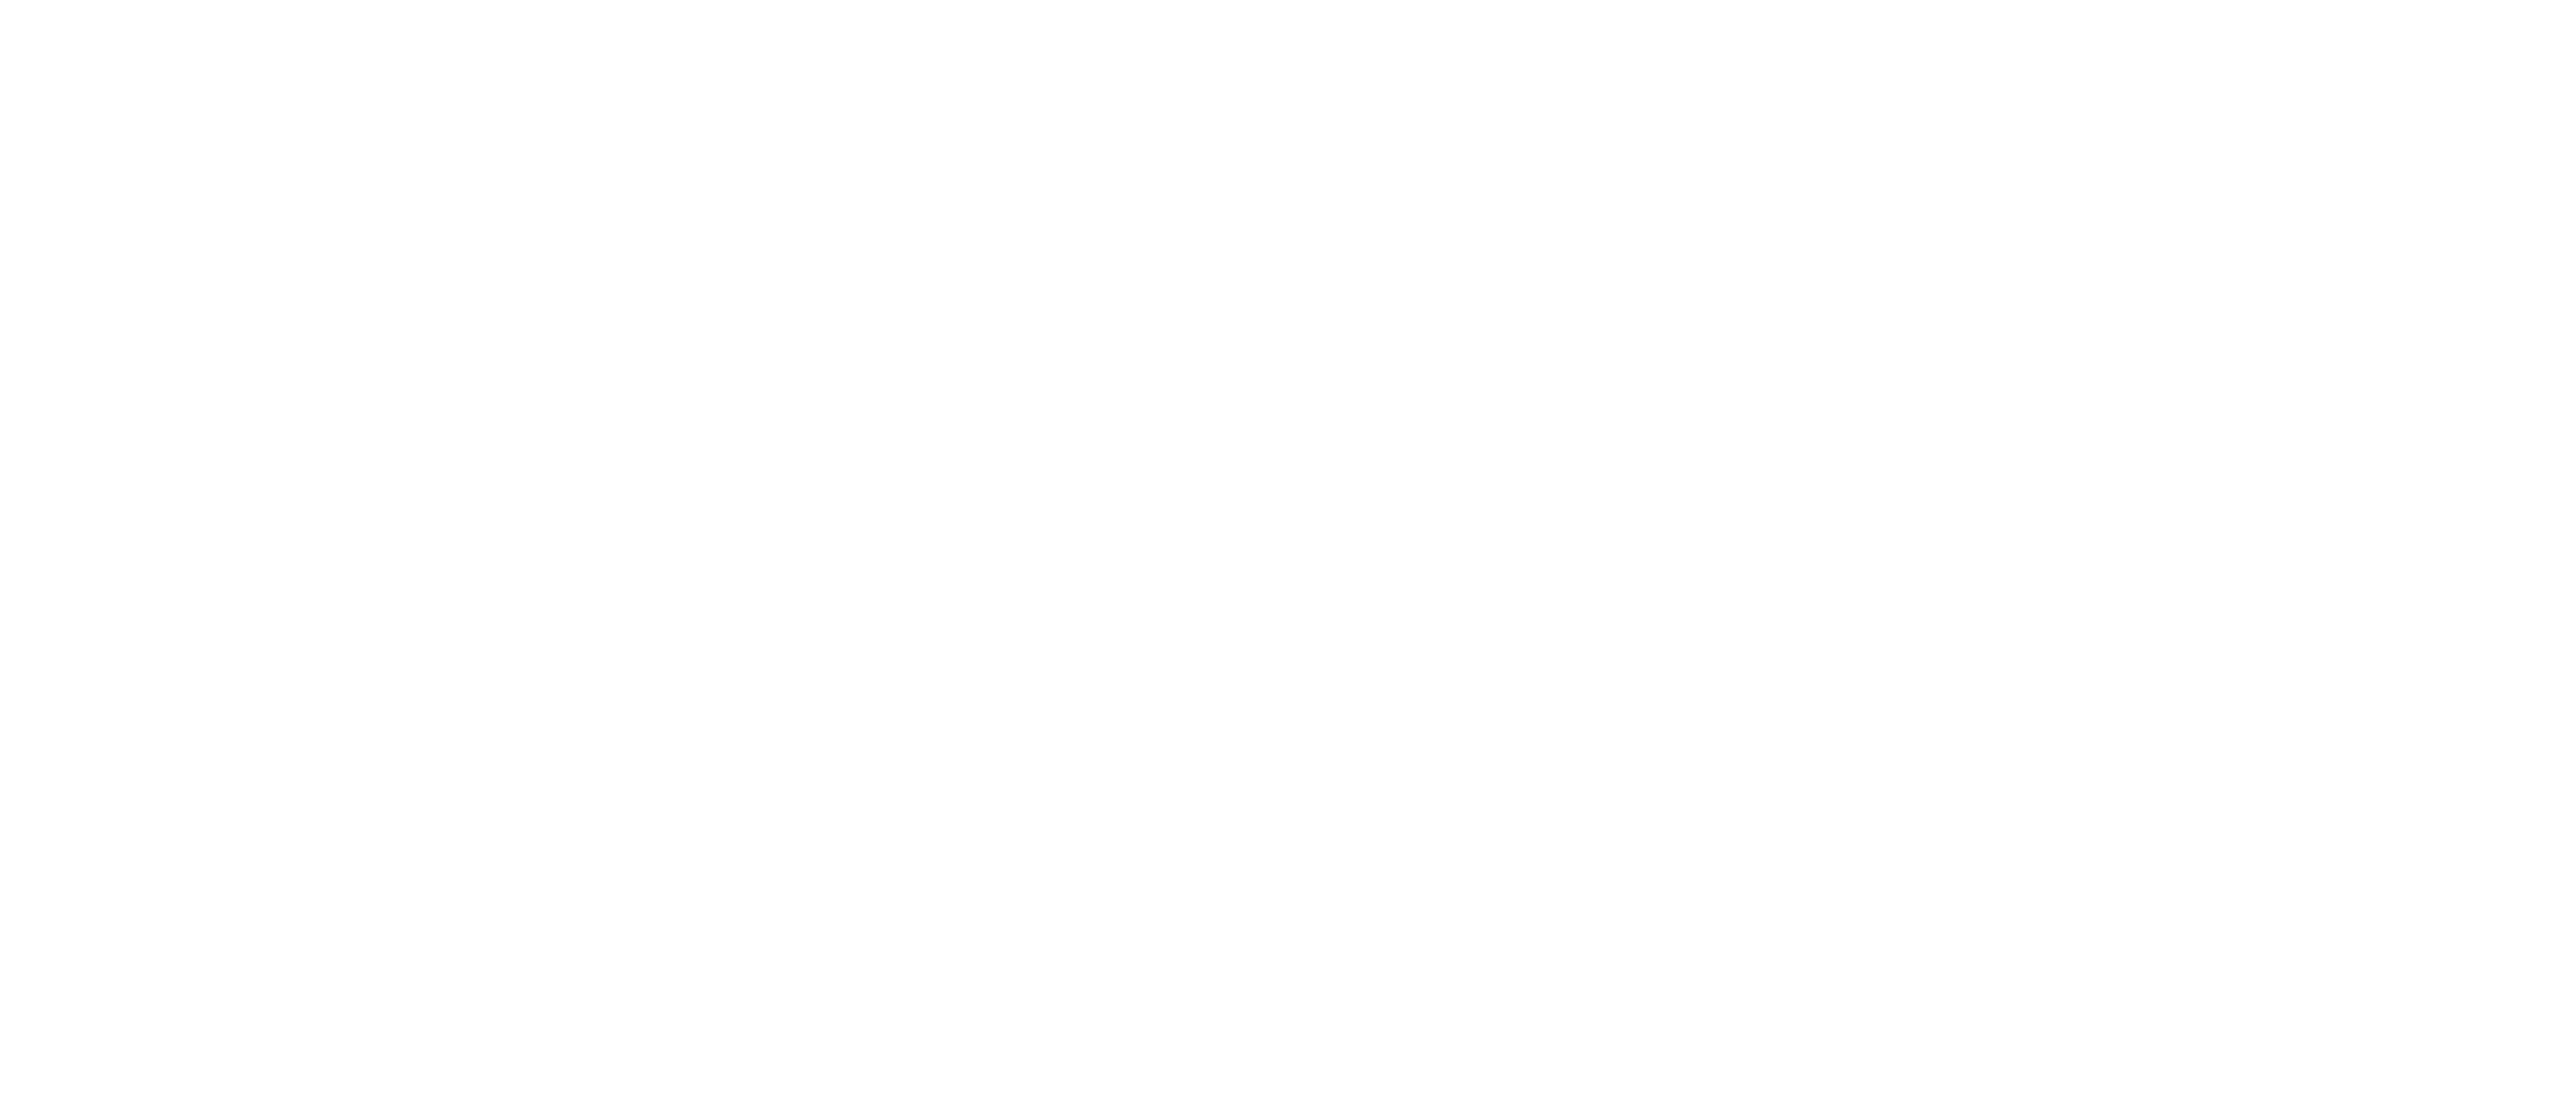 Zagrebačka zalagaonica